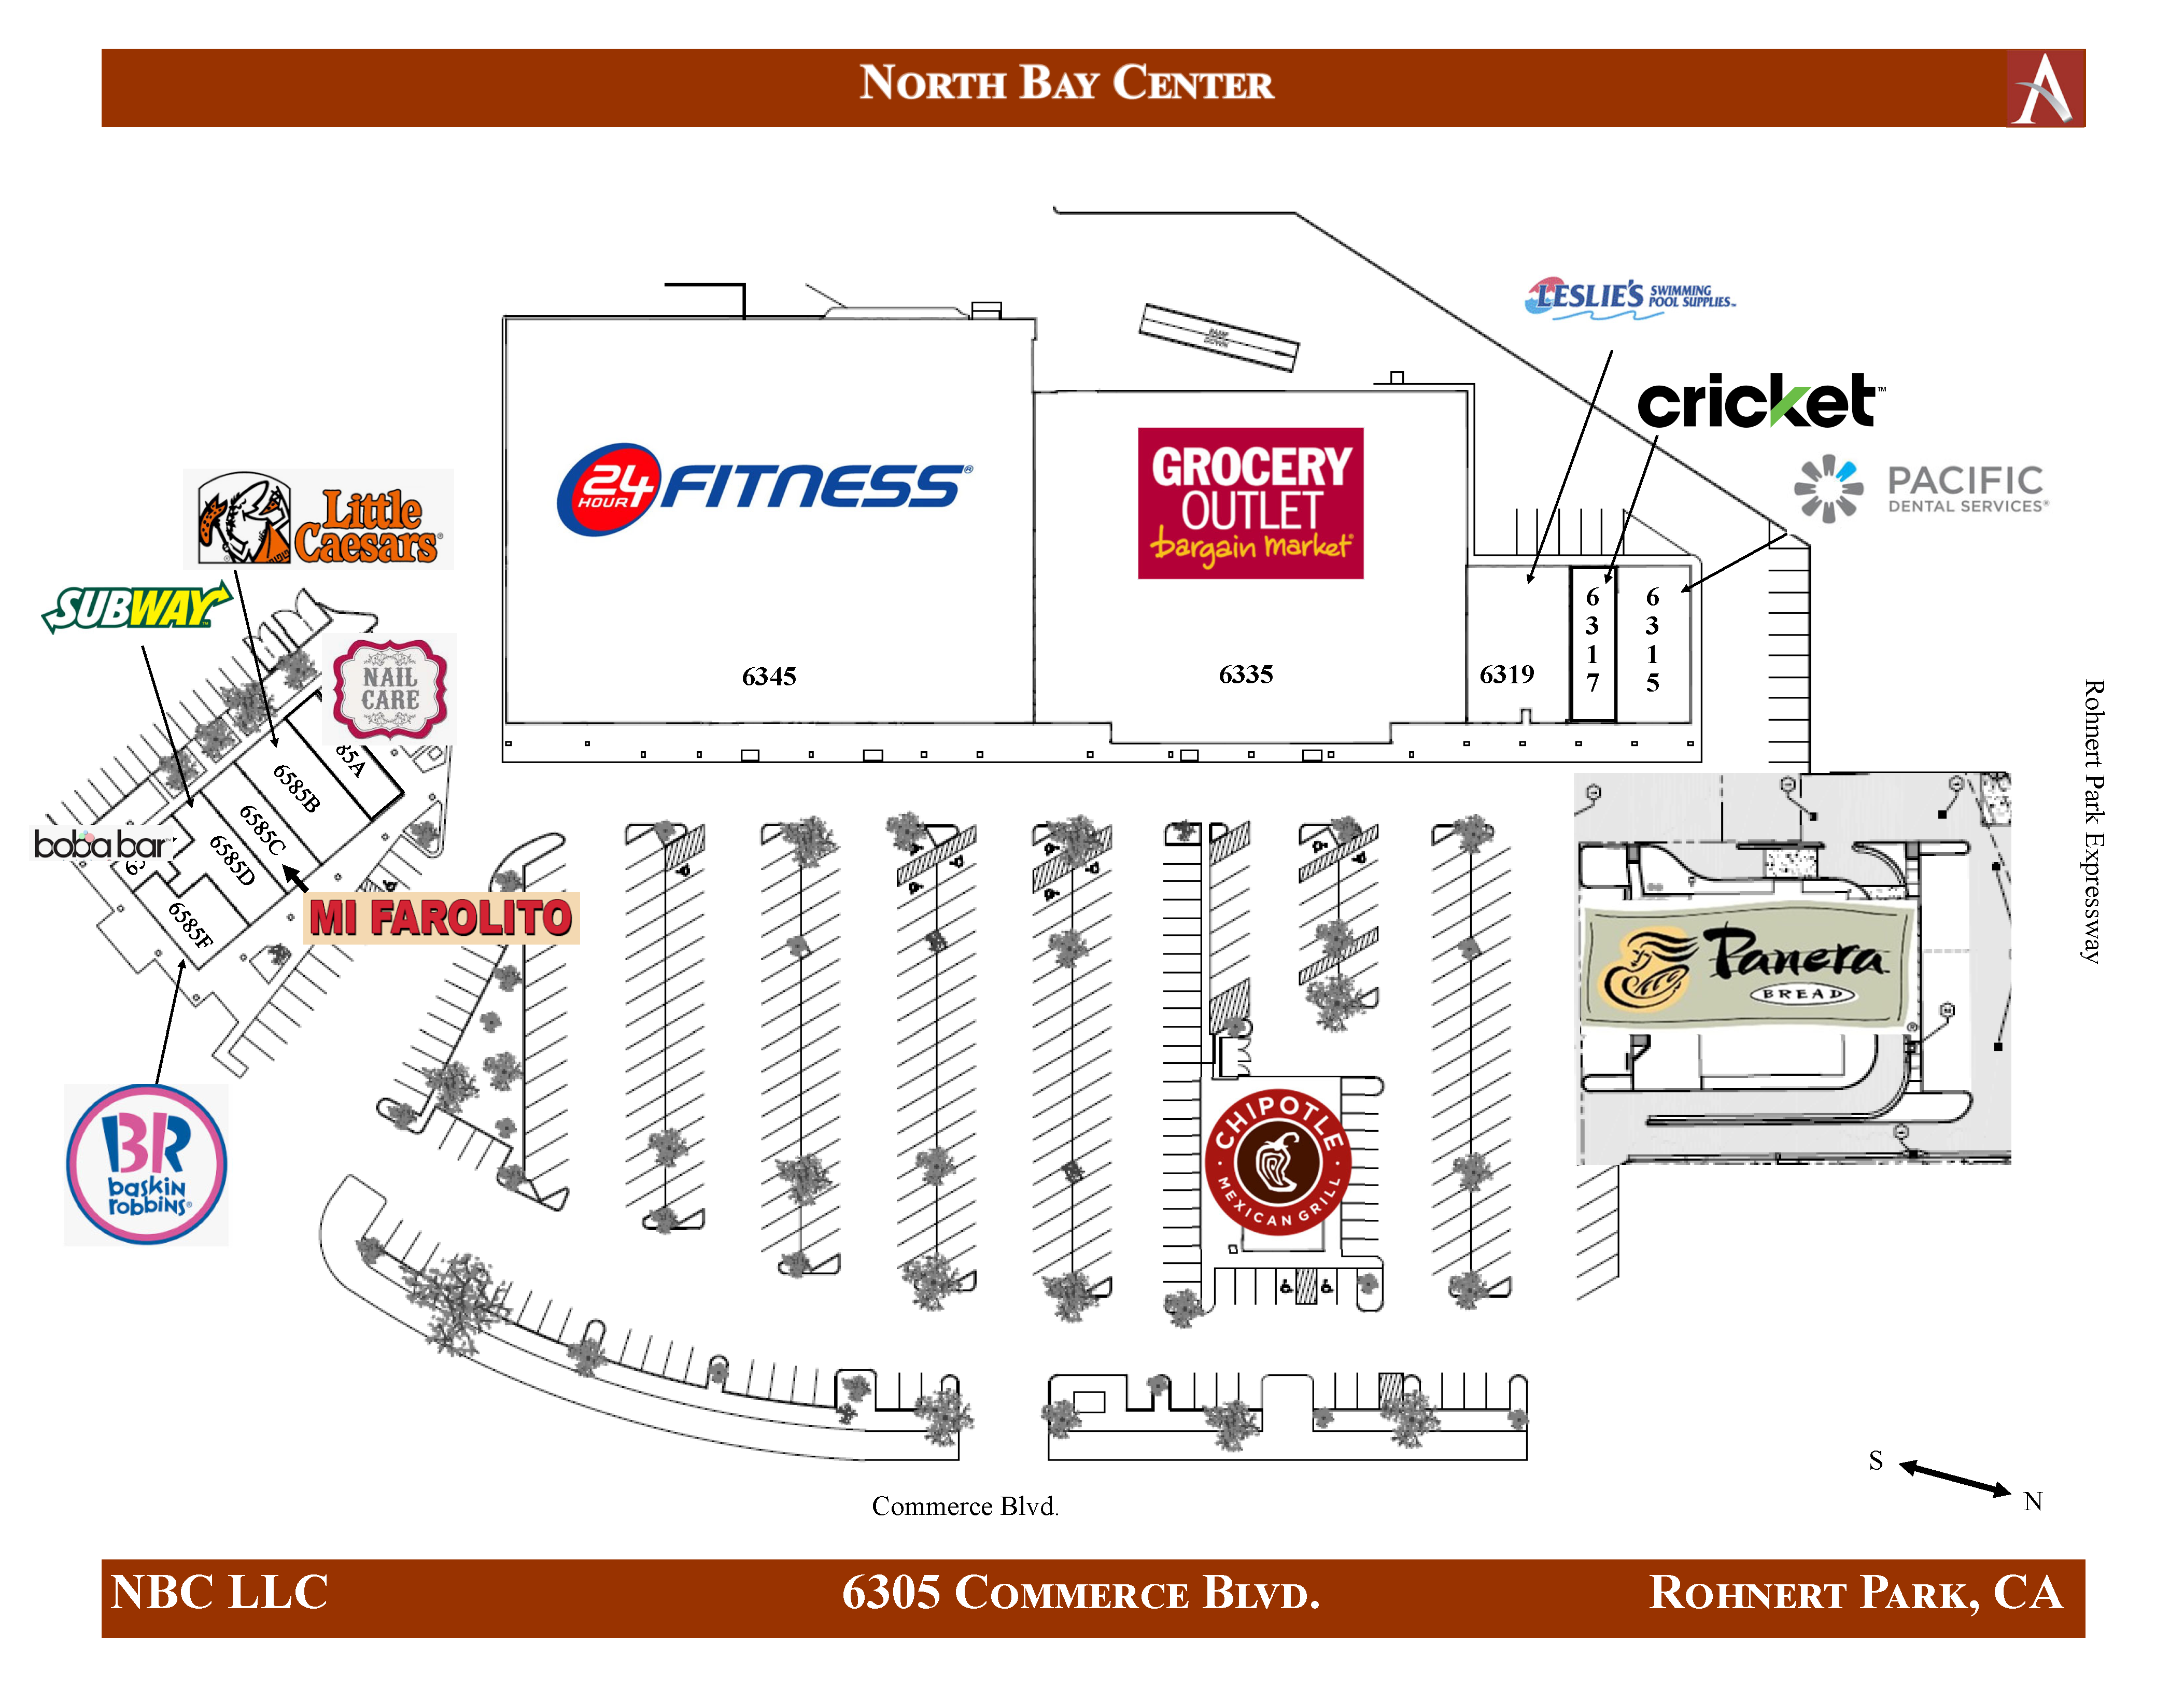 North Bay Center site plan